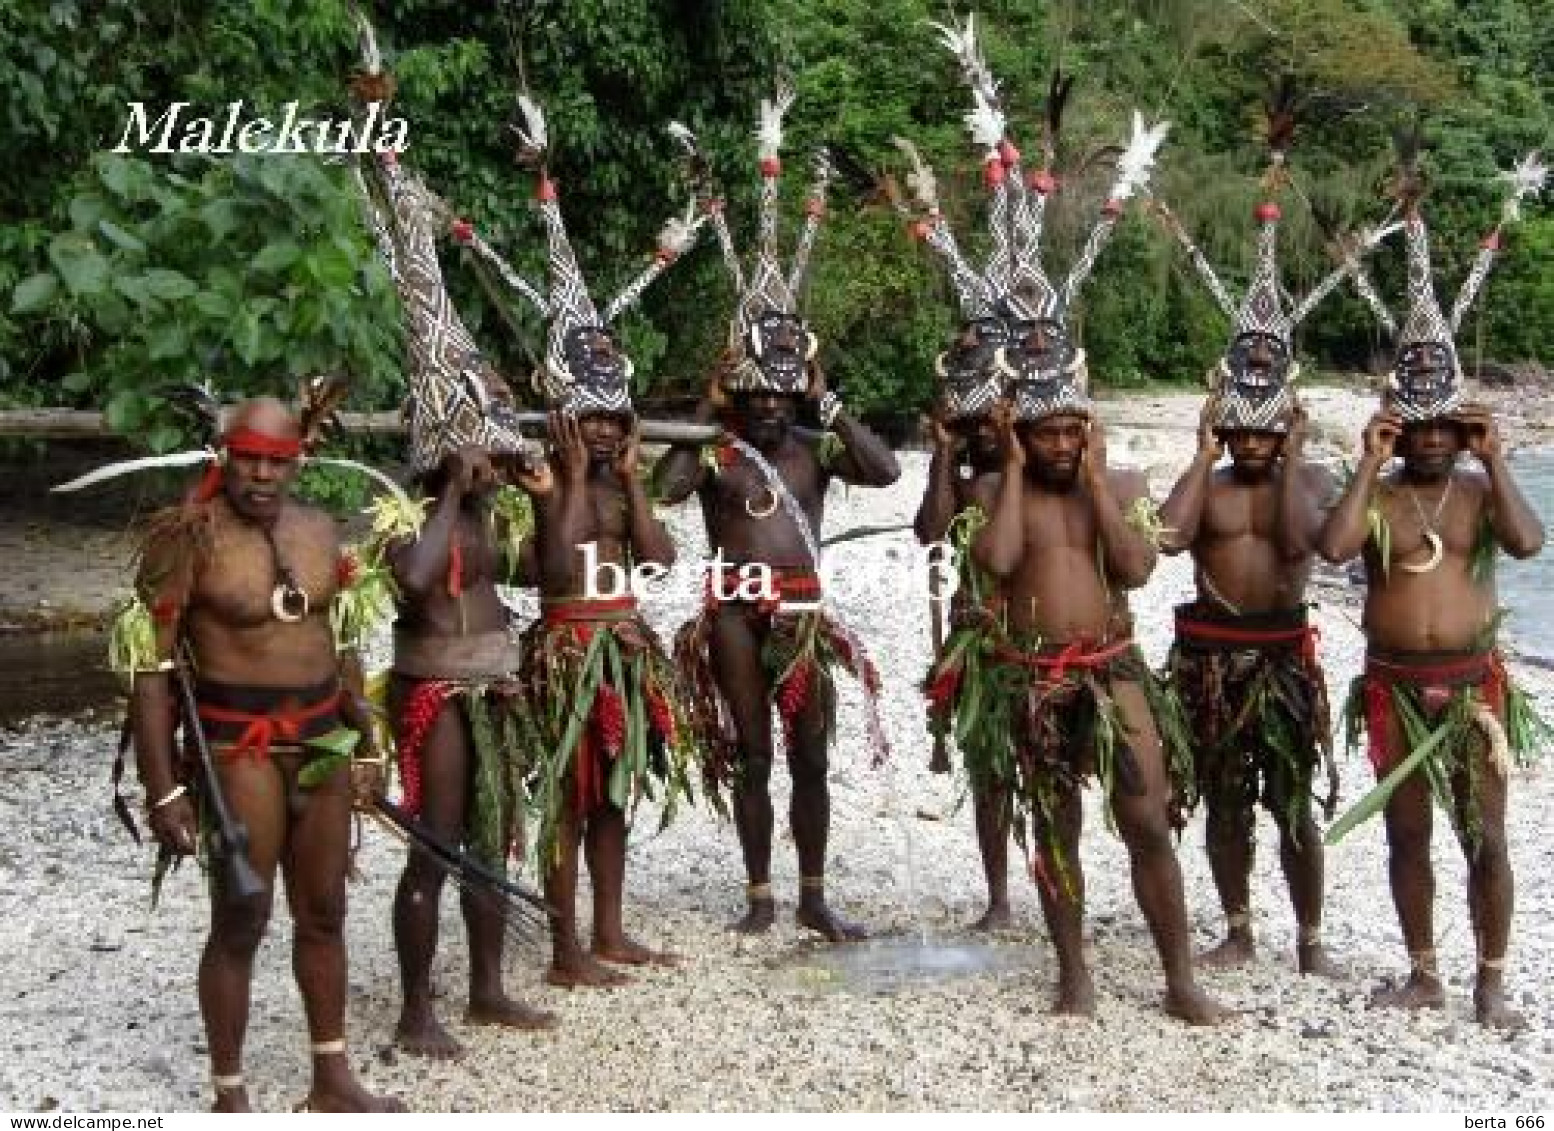 Vanuatu Malekula Island People Dancers New Postcard - Oceania